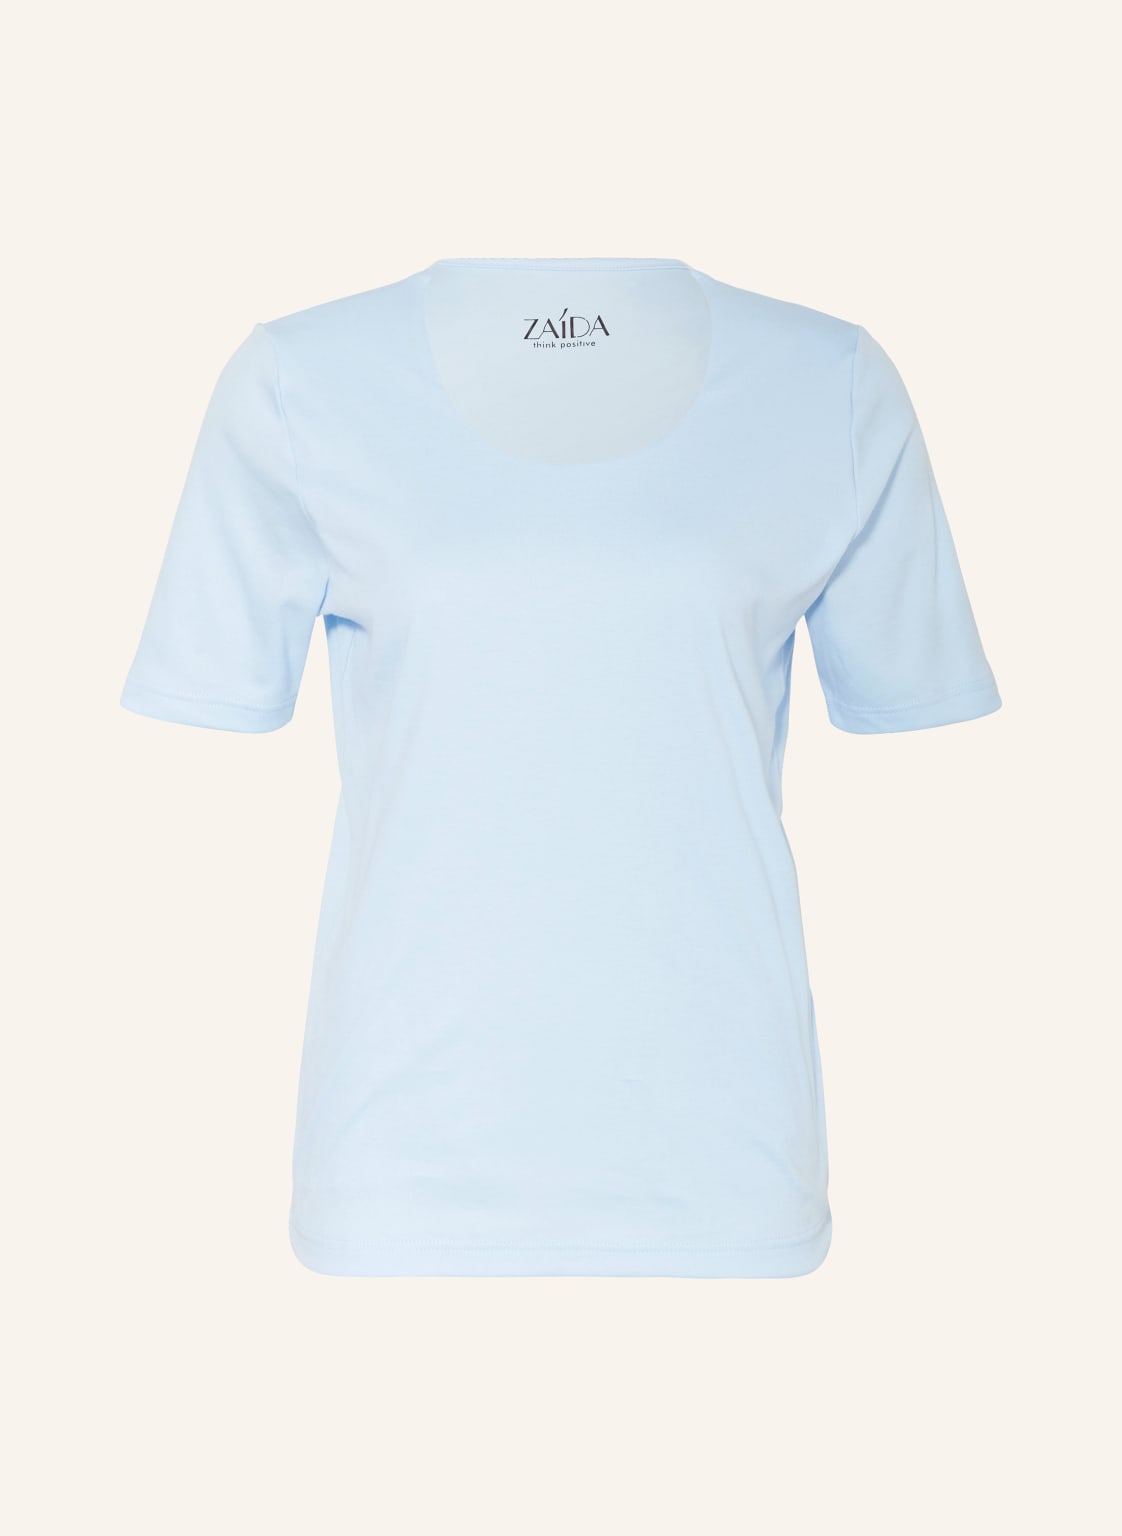 Zaída T-Shirt blau von ZAÍDA